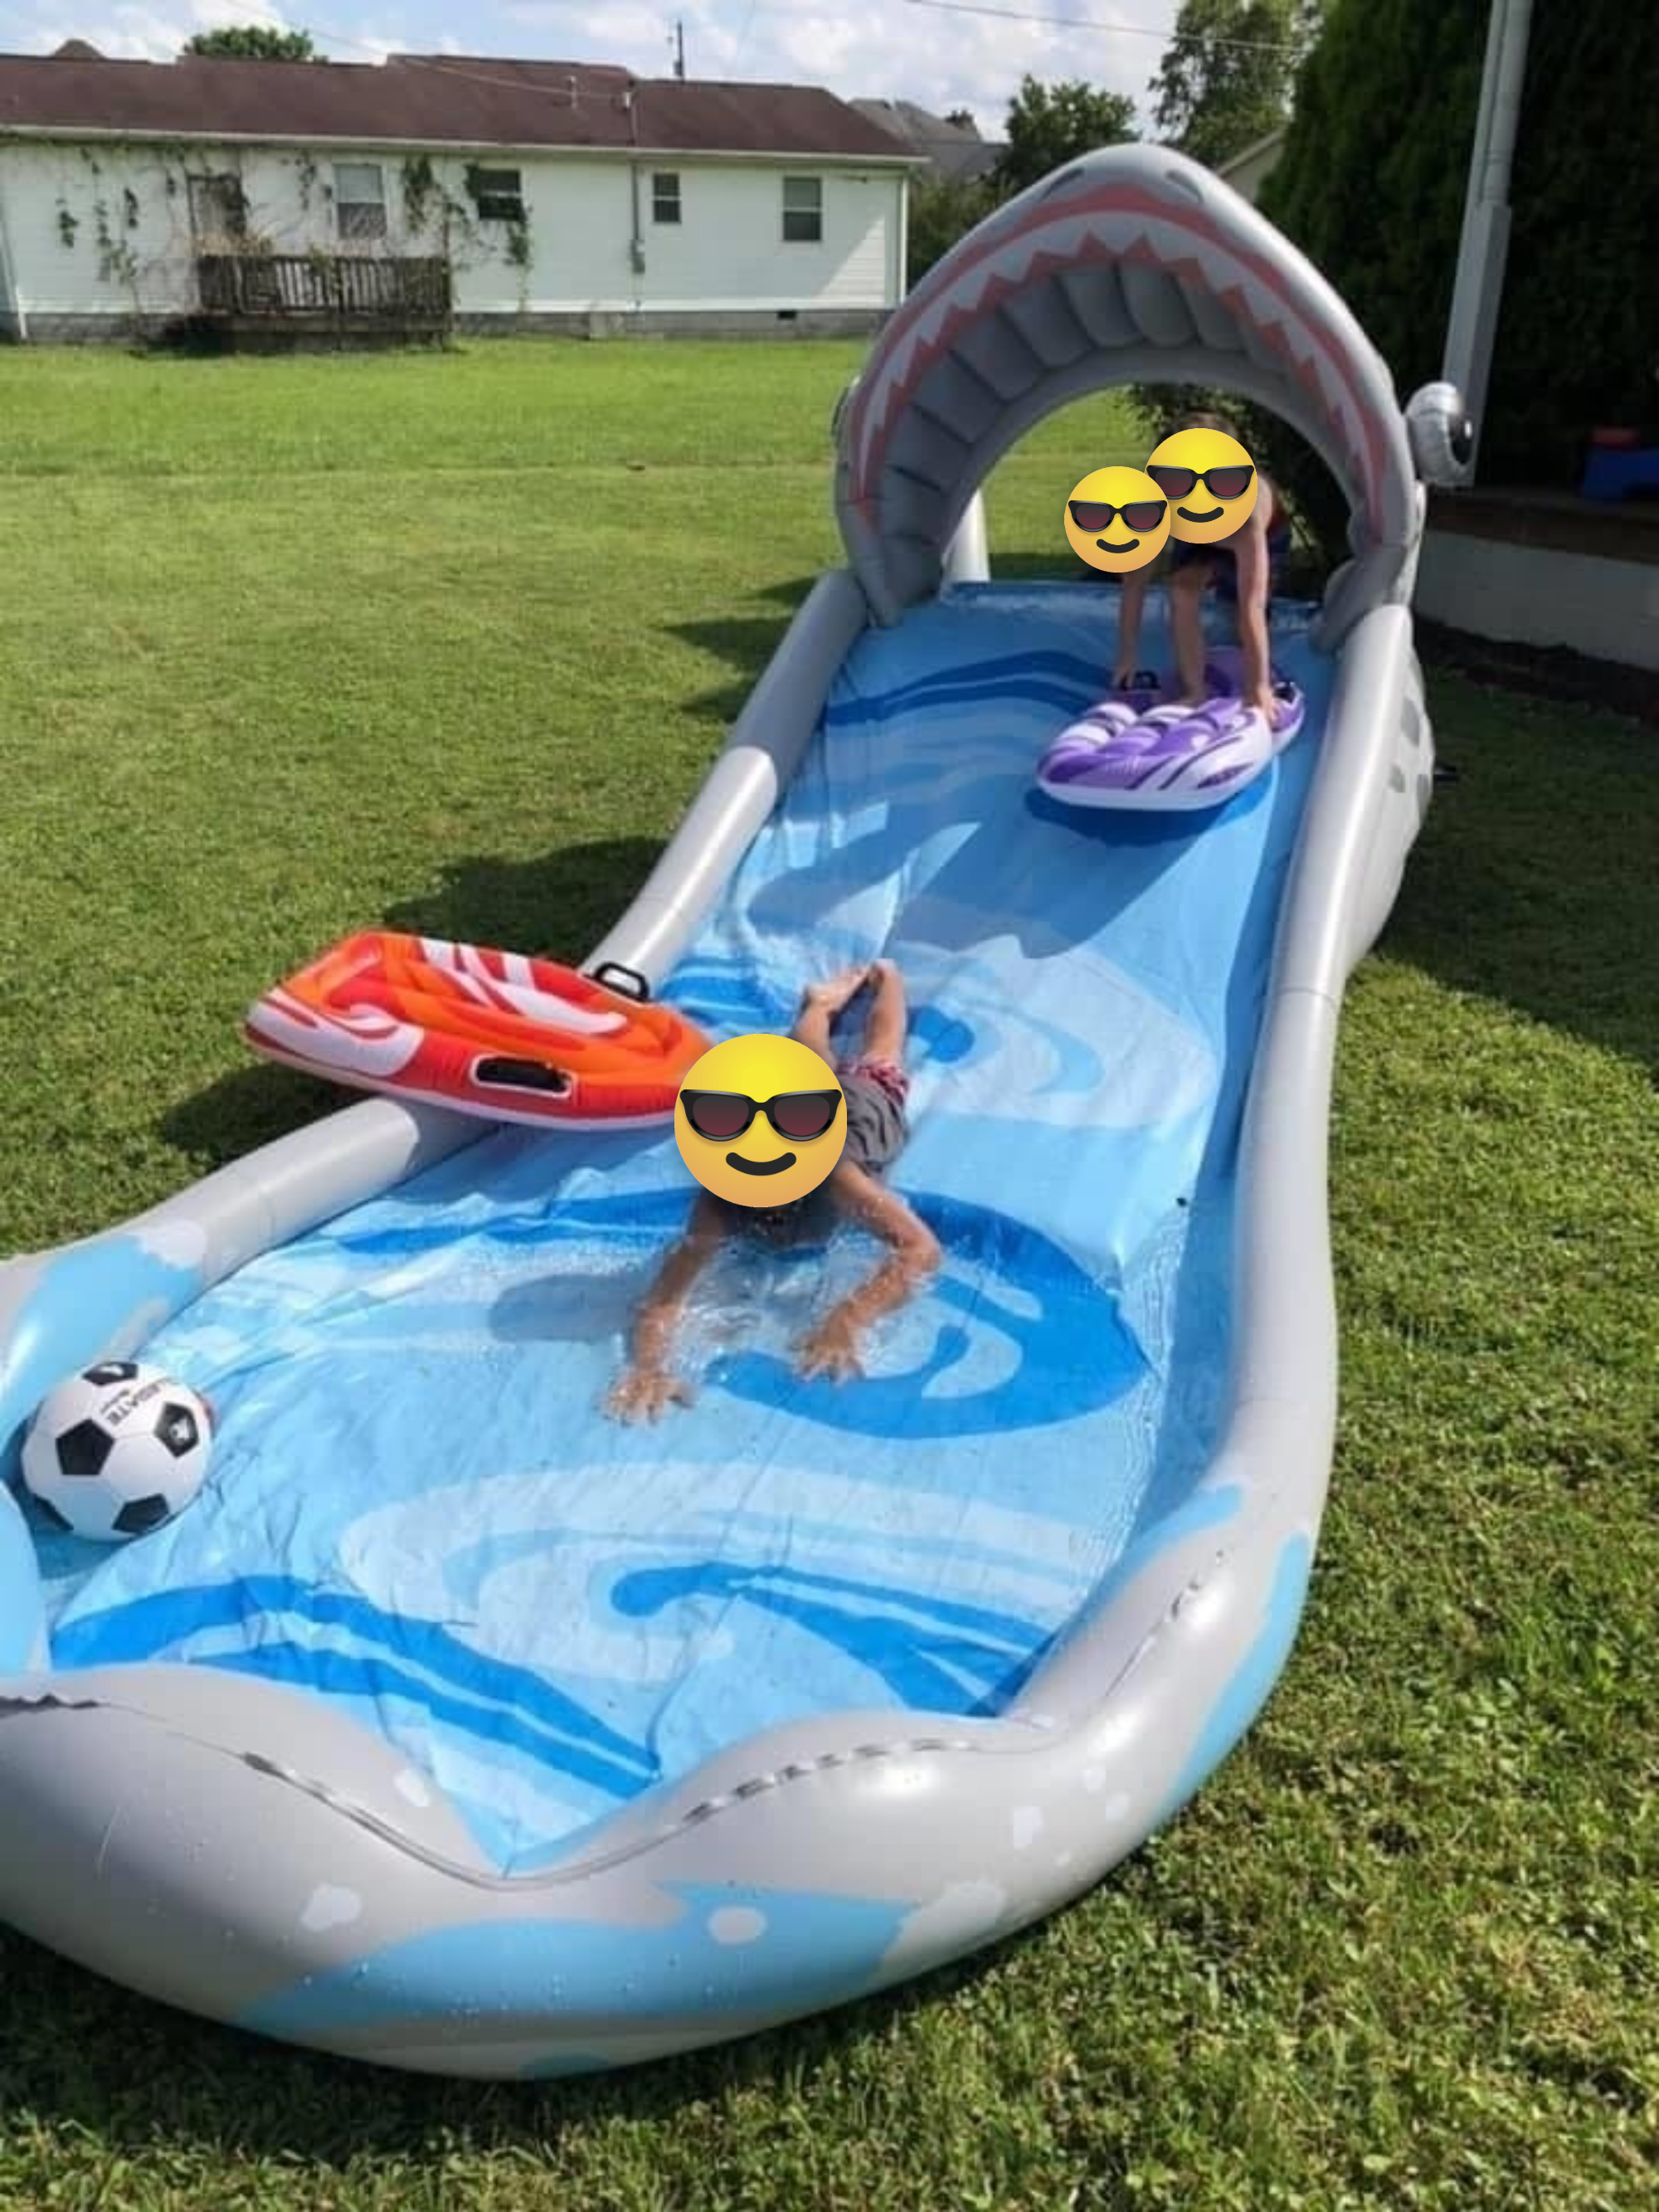 Kids slide down a water slide